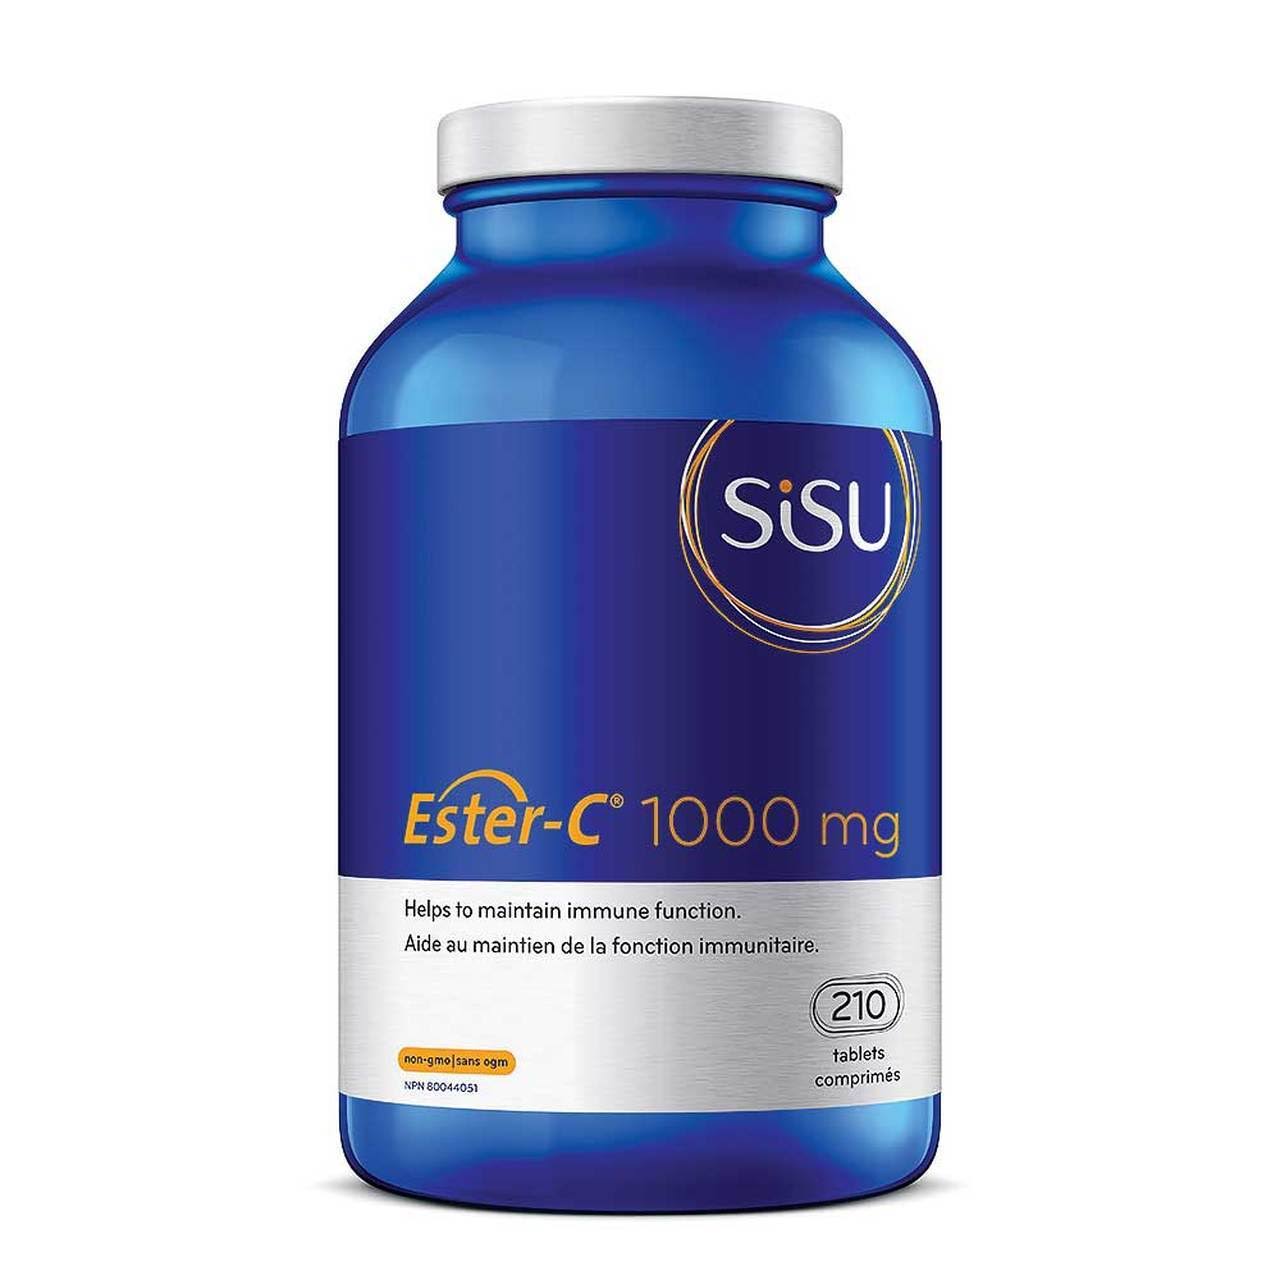 Sisu Ester-C 1000 mg 210 Tablets